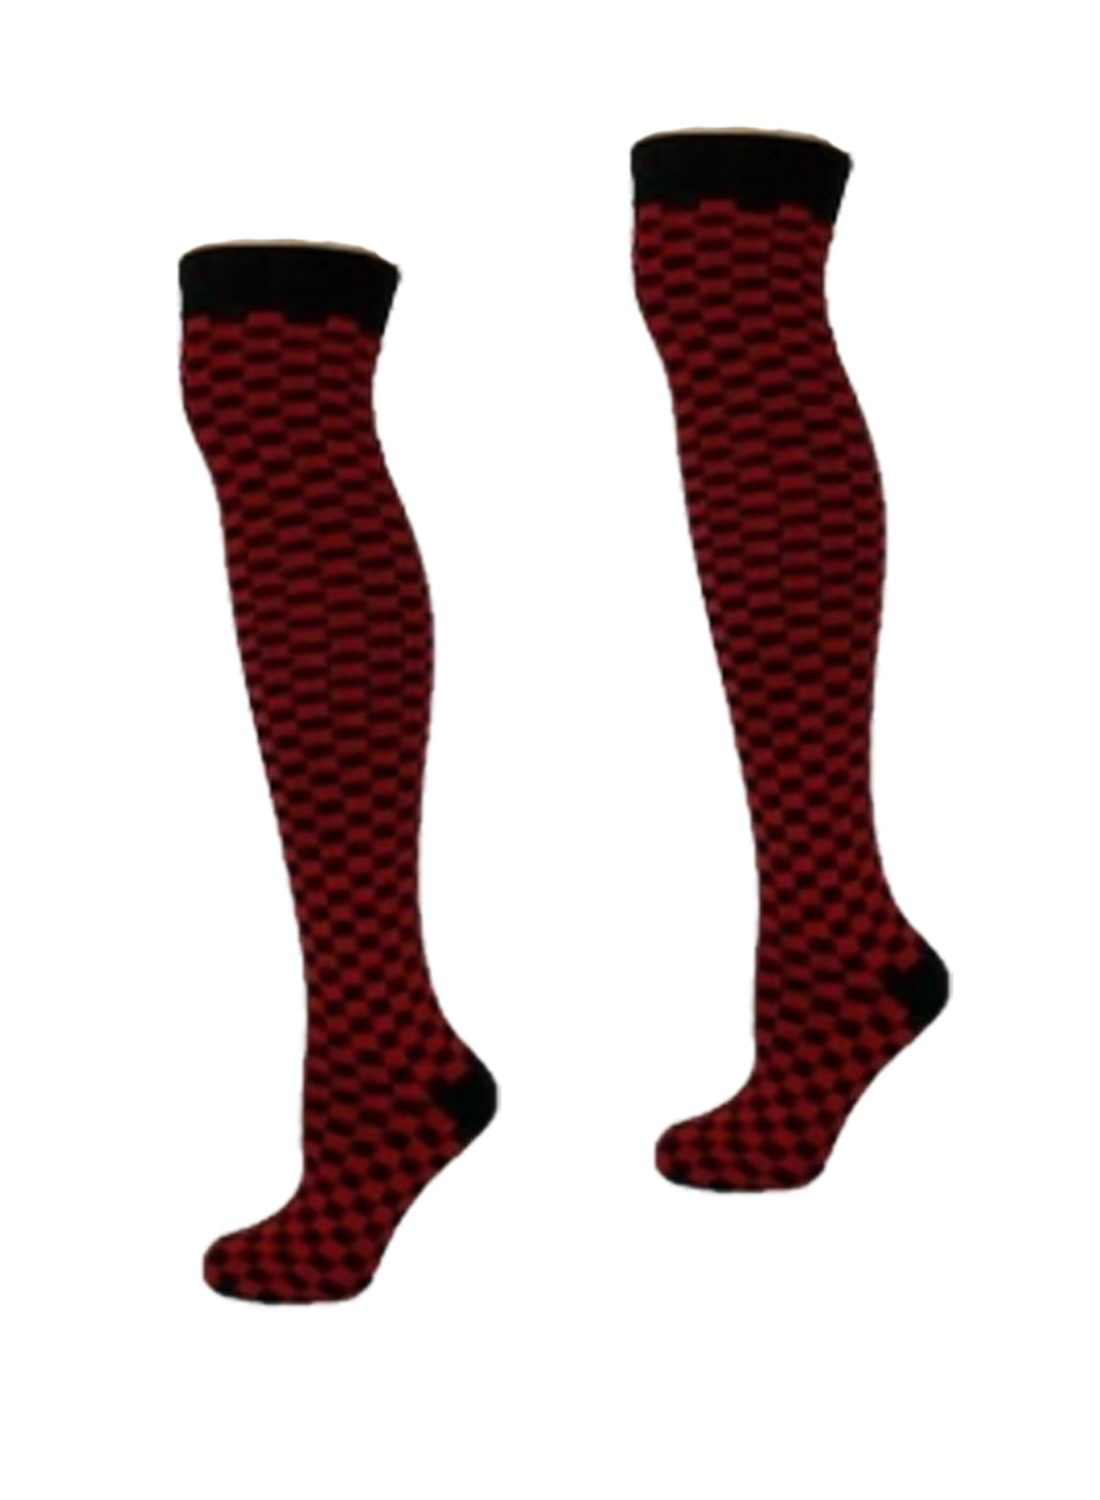 OK Small checkered Socks Black/Red